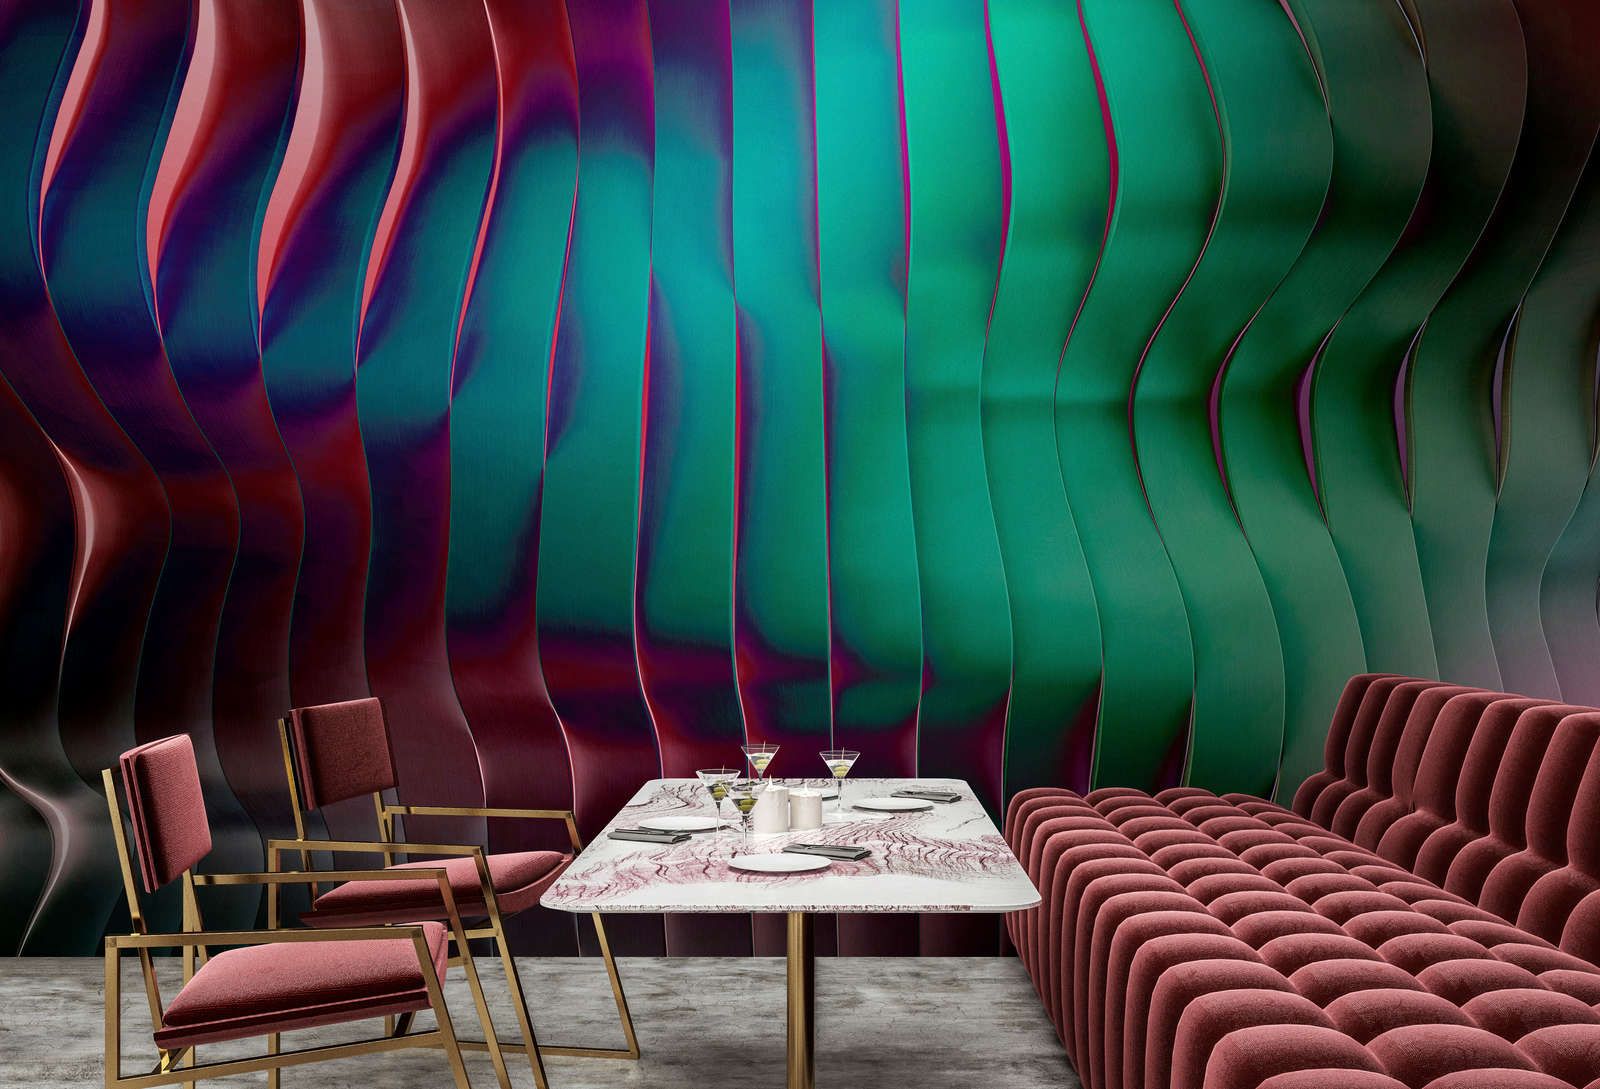             solaris 2 - Modern photo wallpaper with wavy architecture - neon colours | matt, smooth non-woven
        